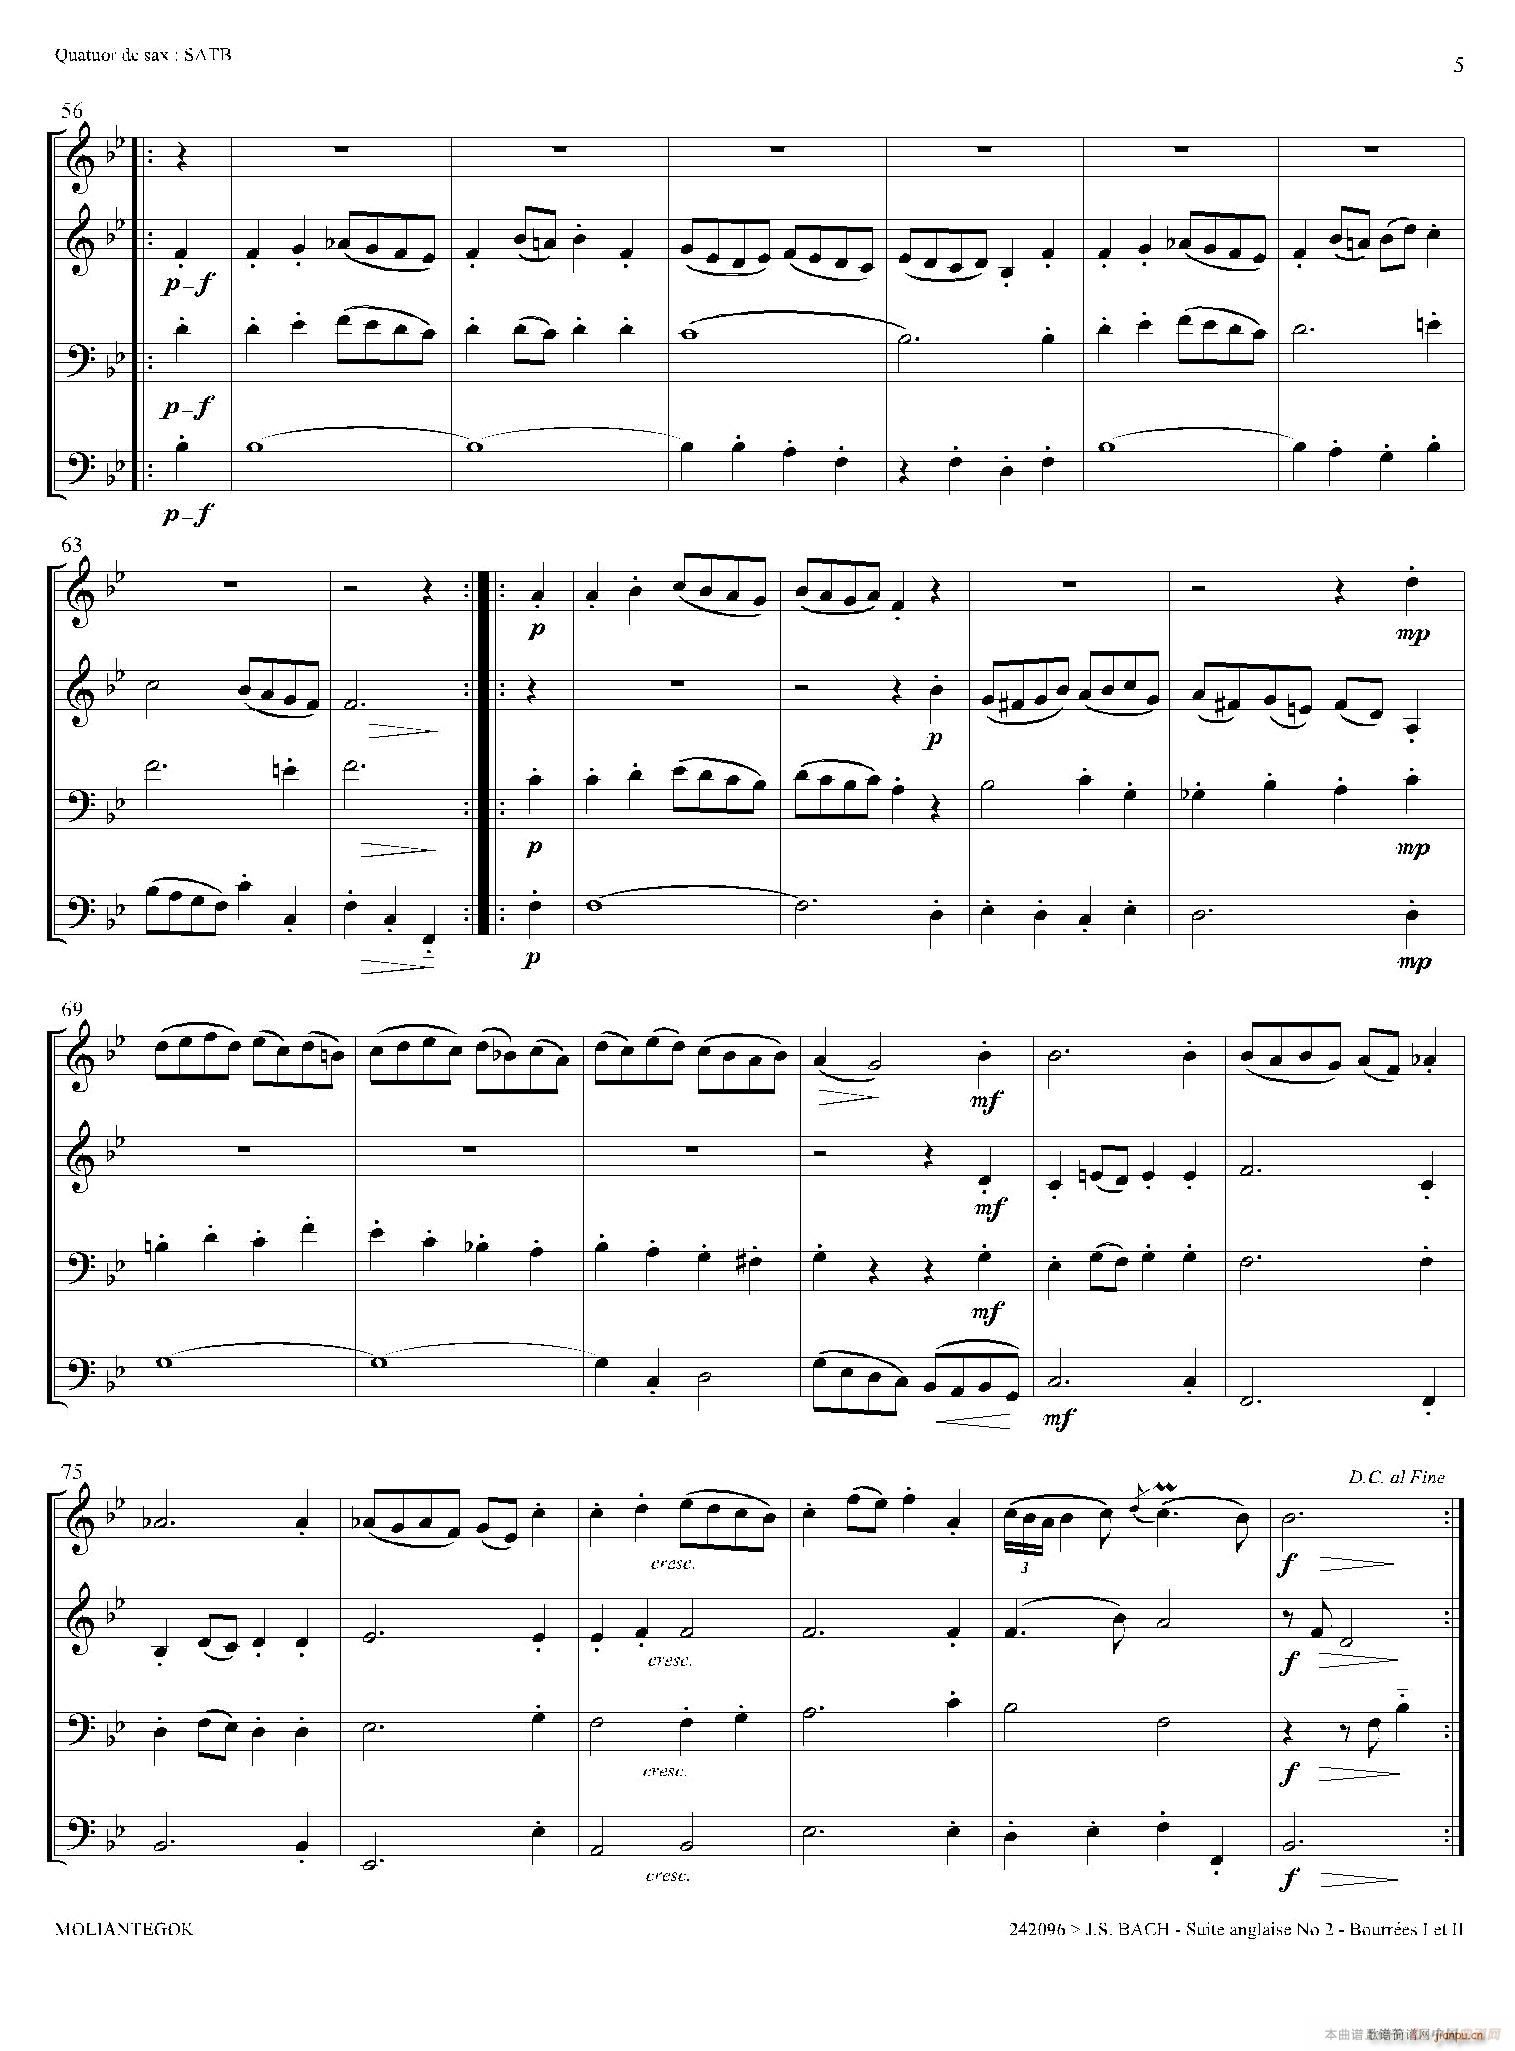 Suite anglaise No 2 BWV 807 法国组曲之二 布列舞曲 四重奏 4